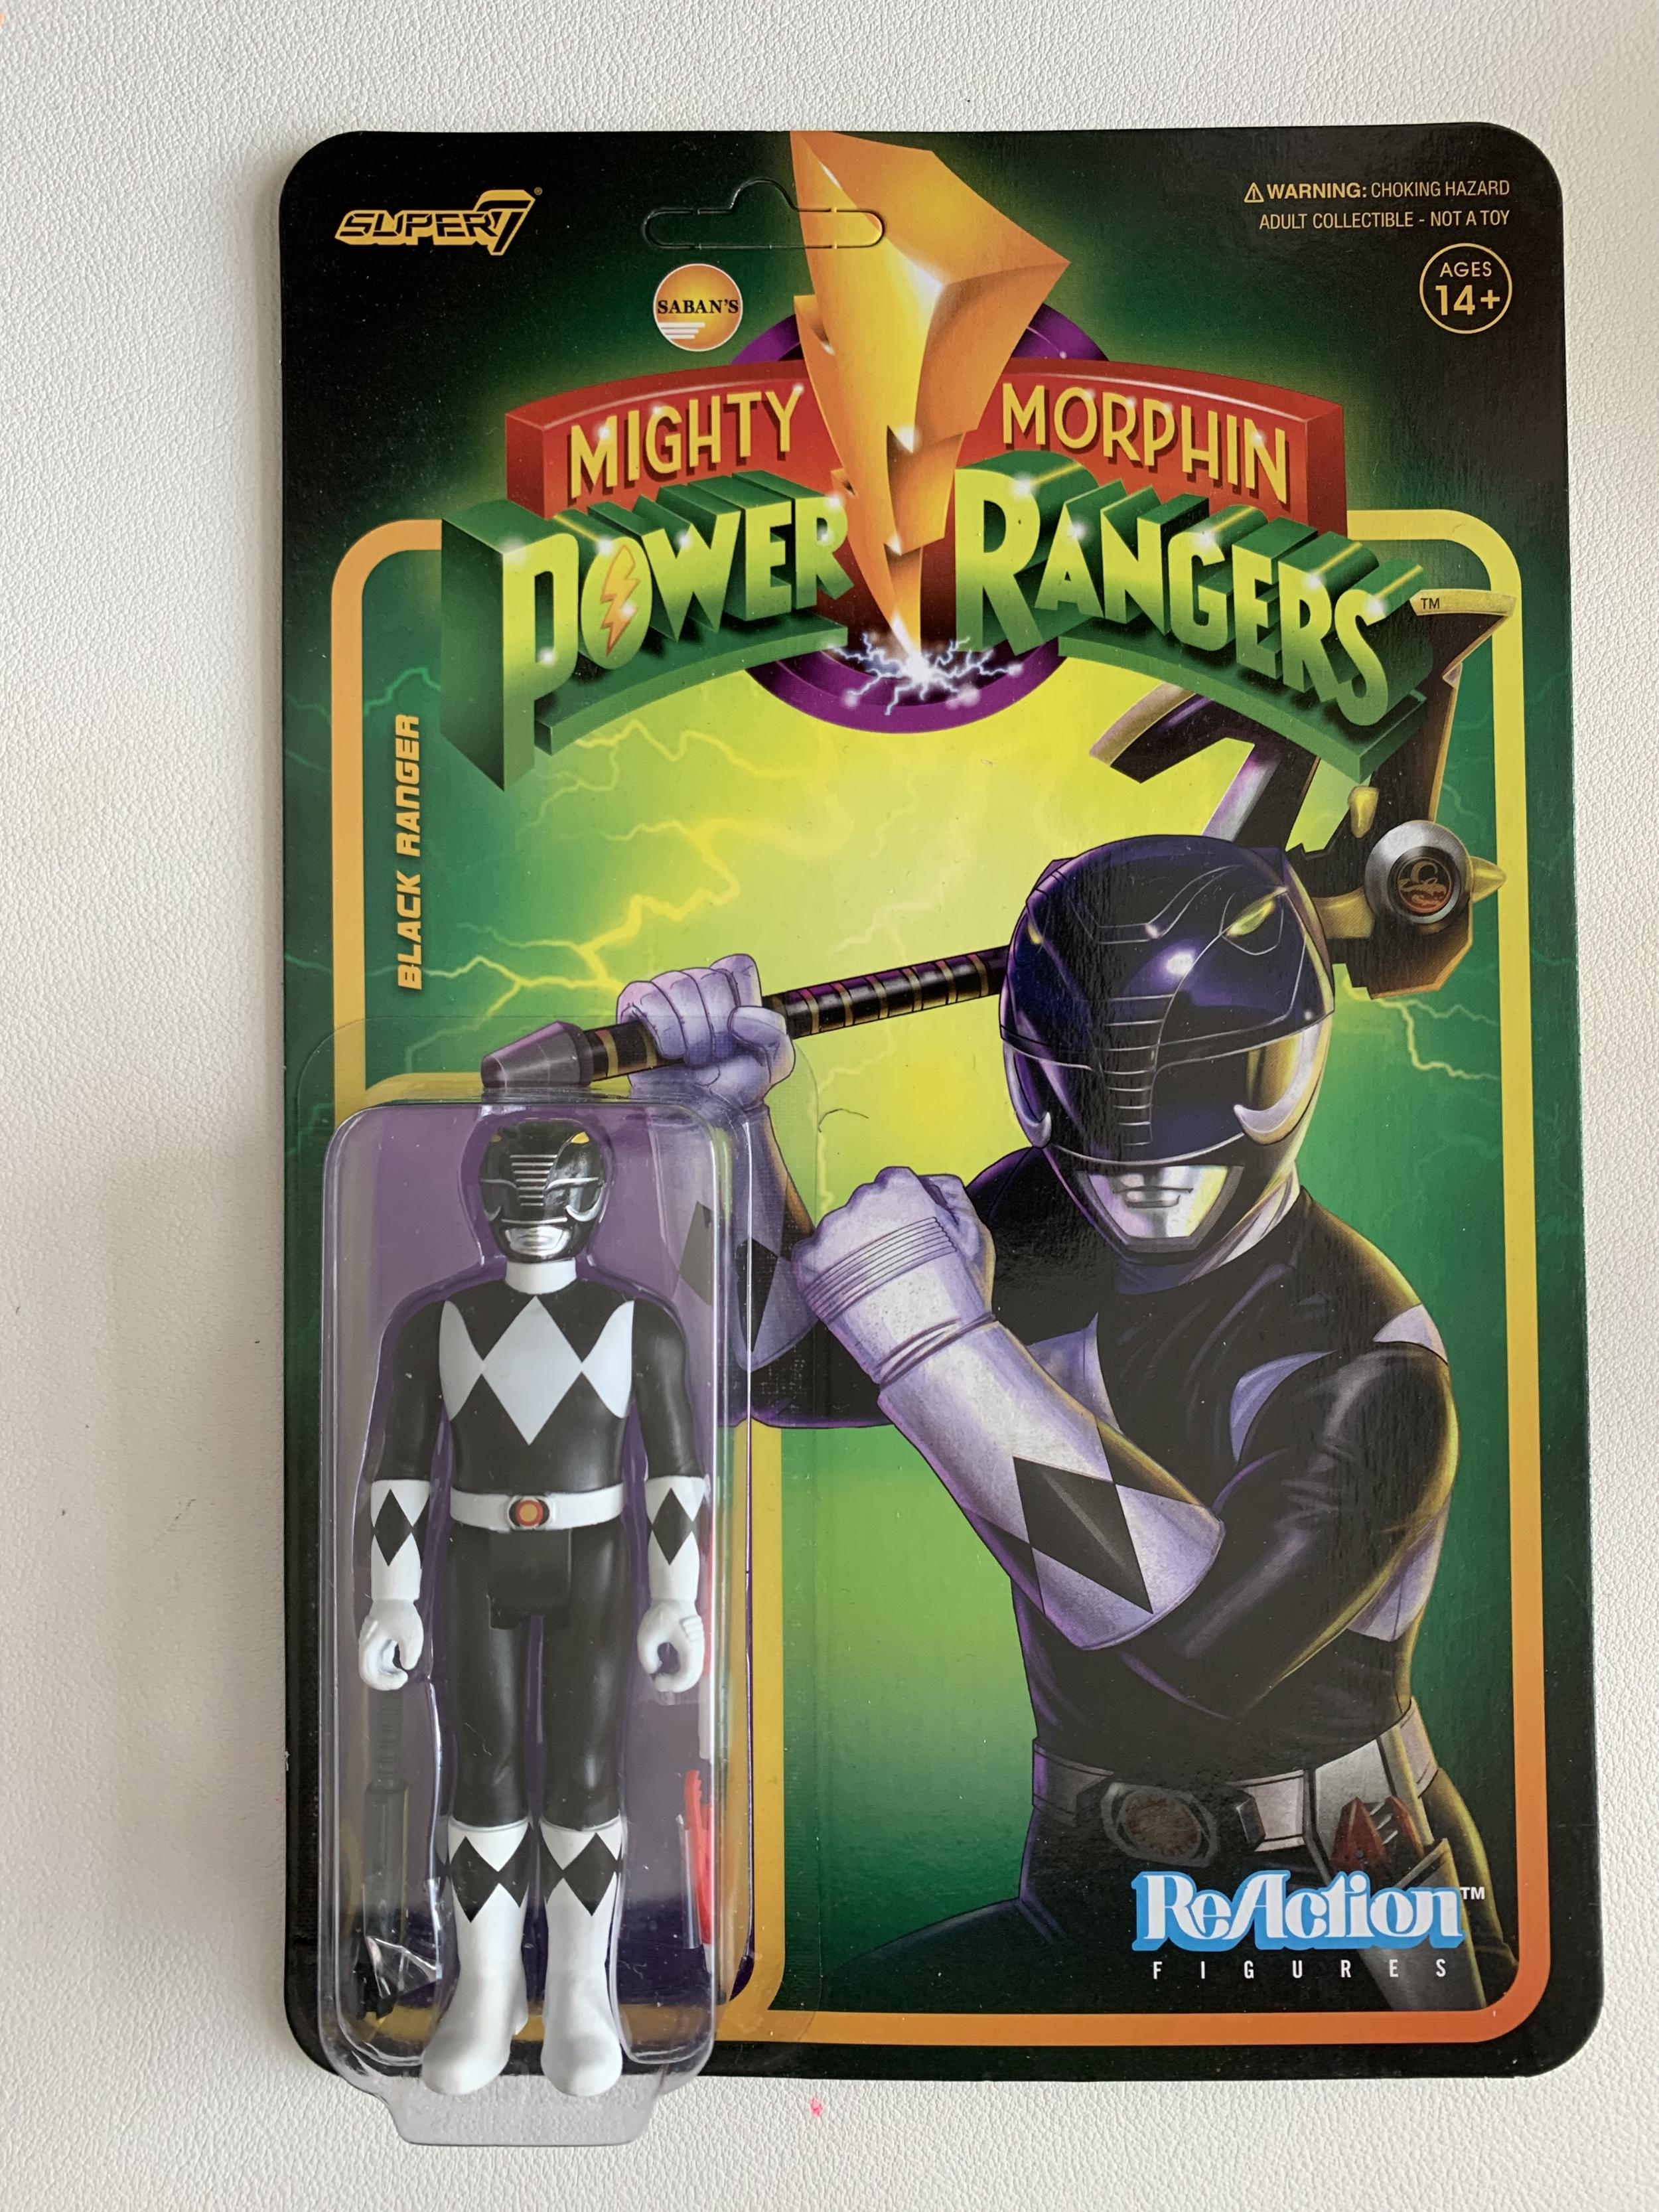 Black Ranger, ReAction figure Wave 2 from the TV series ‘Power Rangers’, Super7